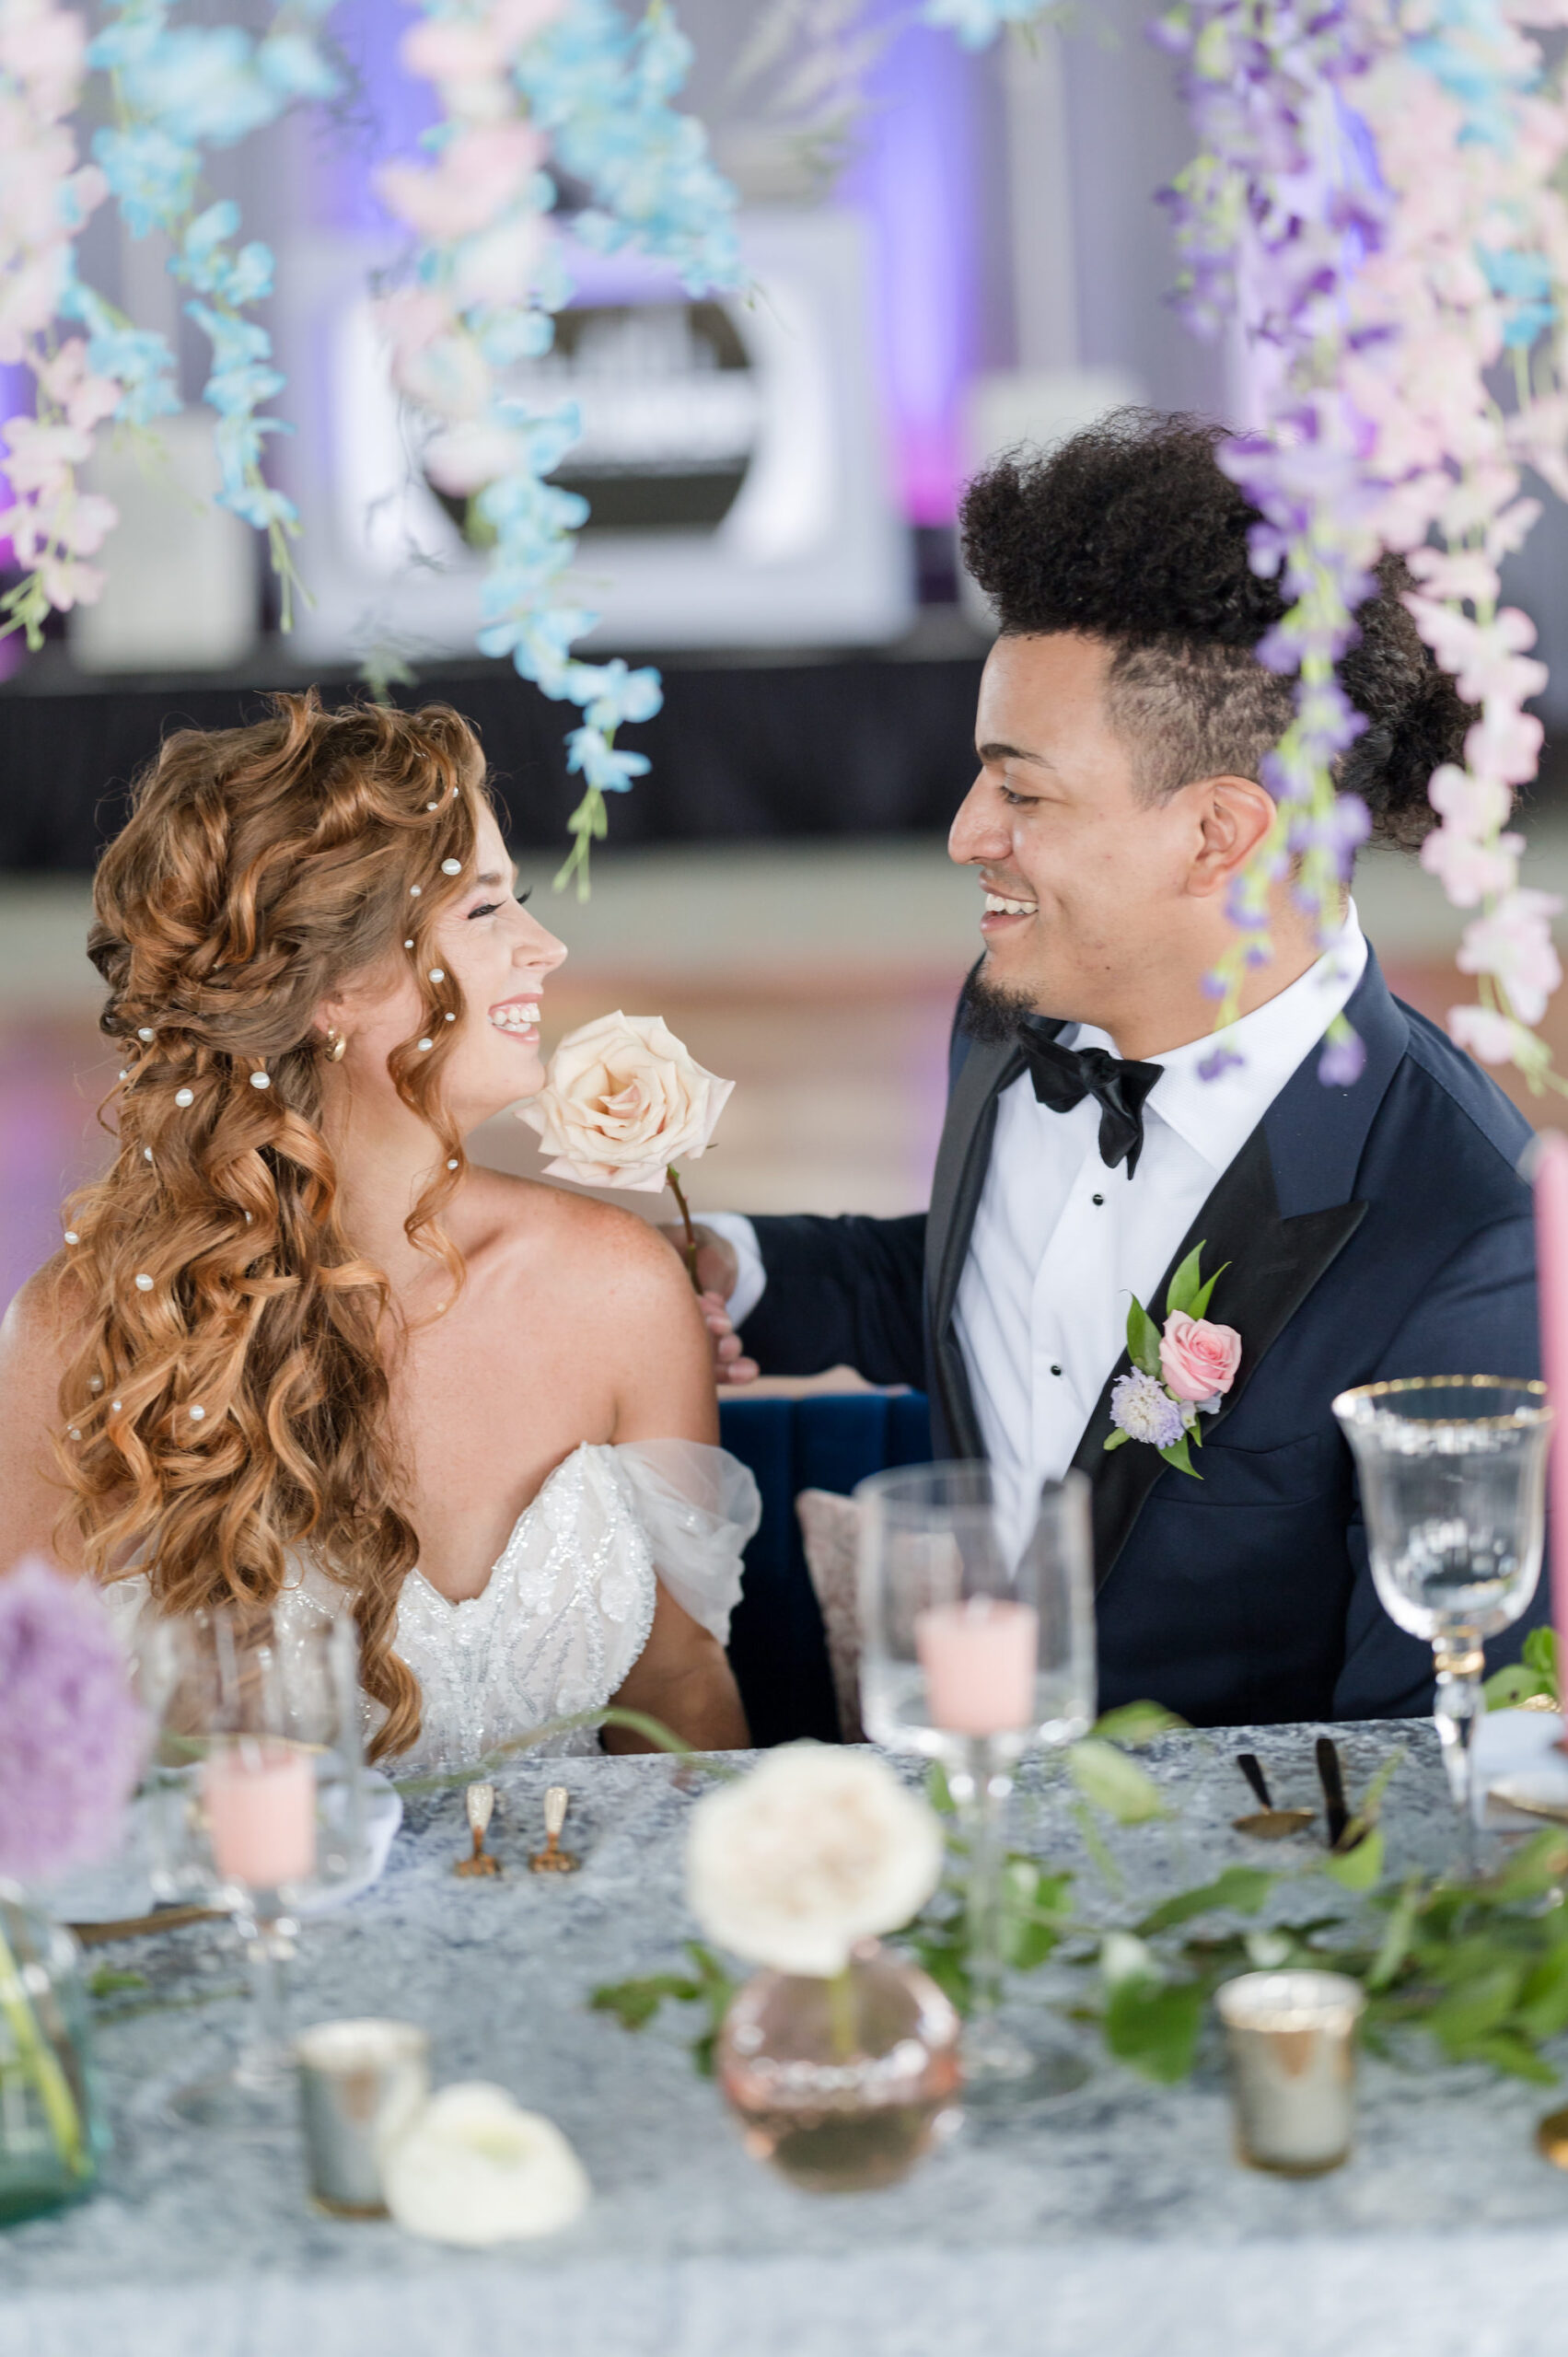 Intimate Bride and Groom Wedding Portrait | Tampa Wedding Photographer Amanda Zabrocki Photography